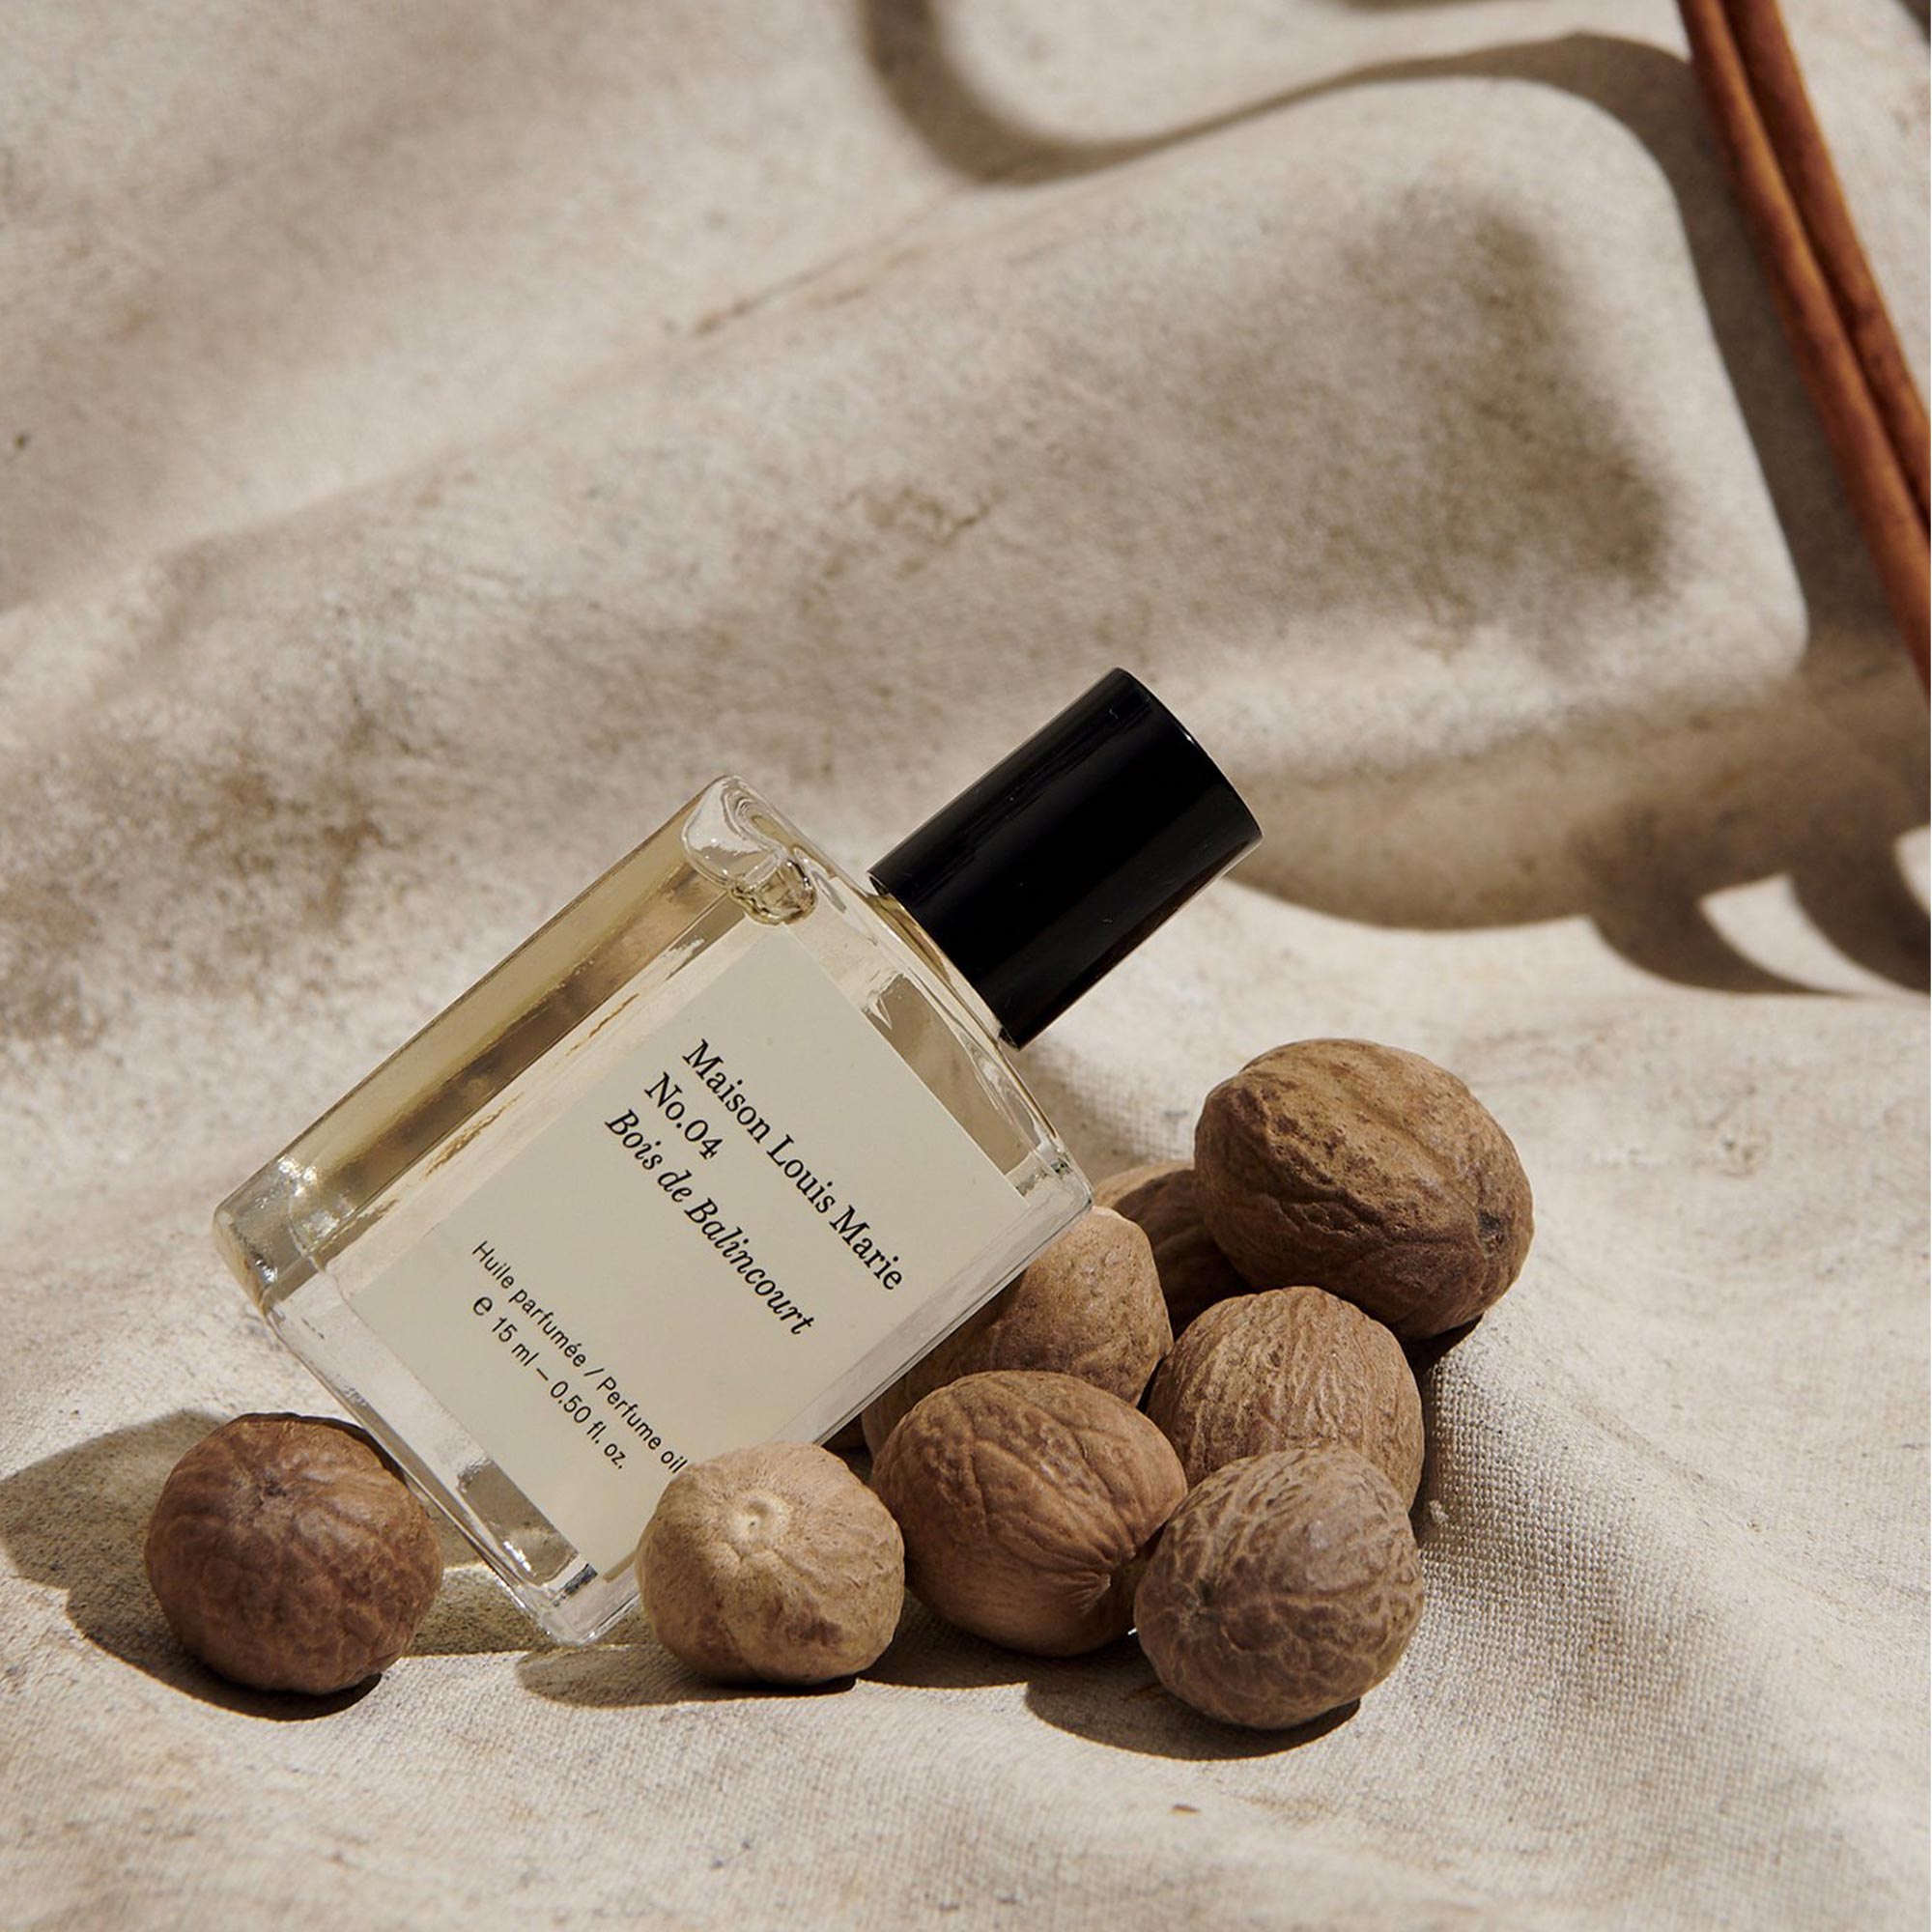 Perfume Oil No.04 Bois de Balincourt